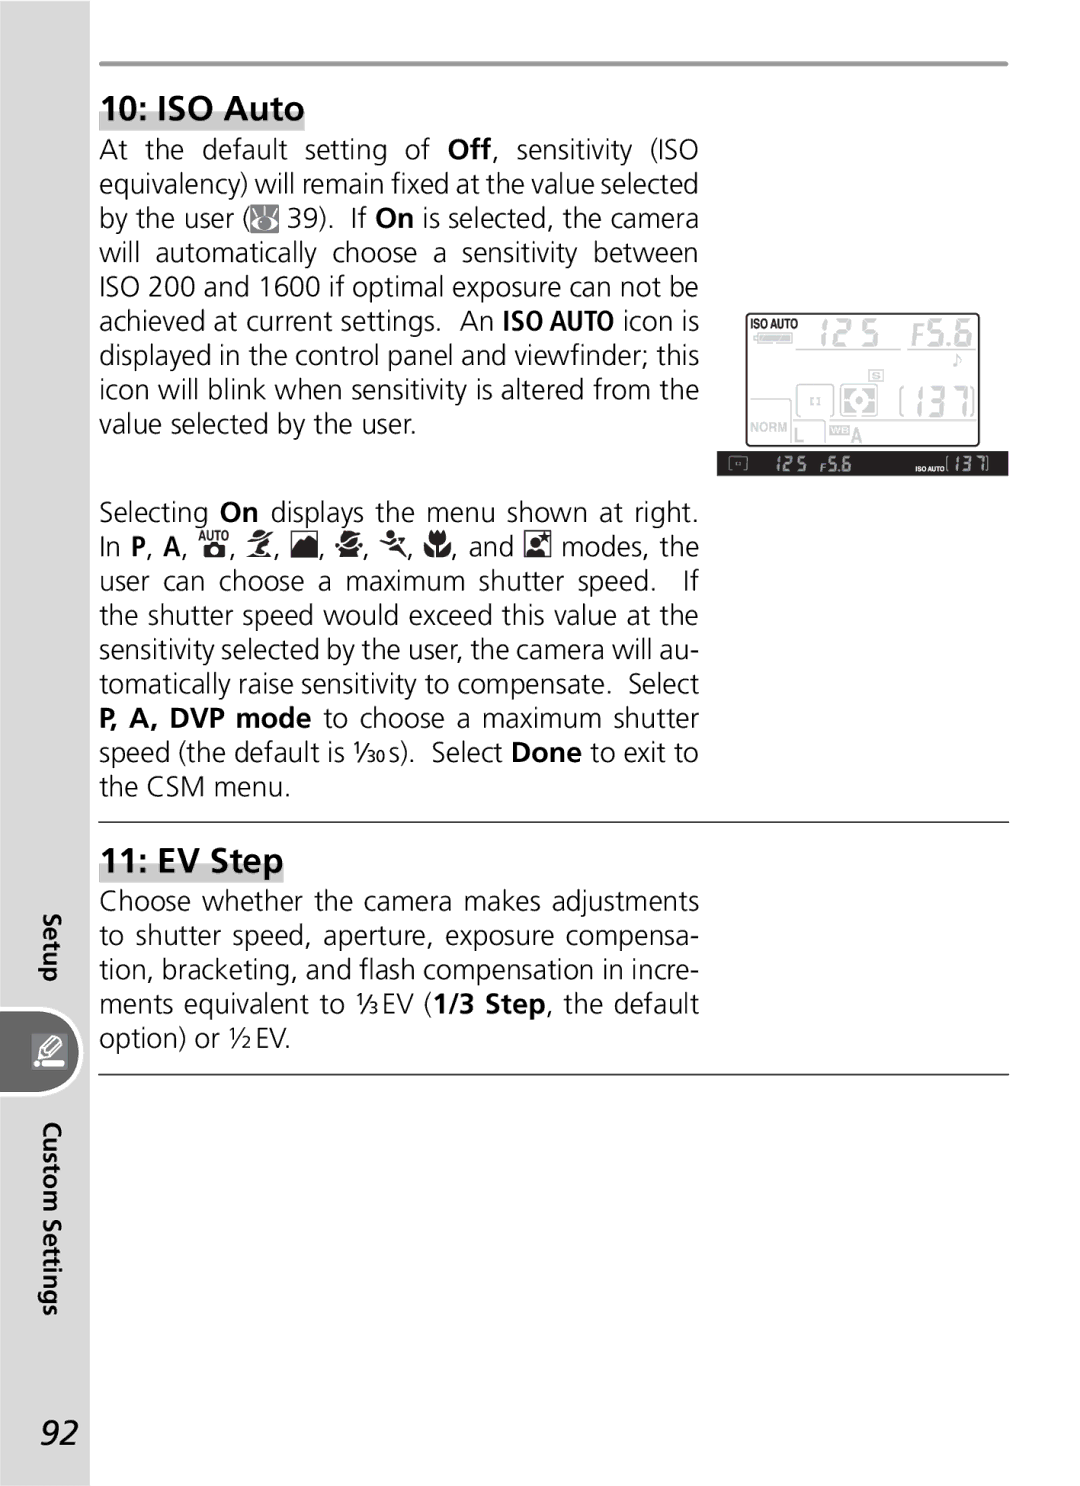 Nikon D50 manual ISO Auto, EV Step 